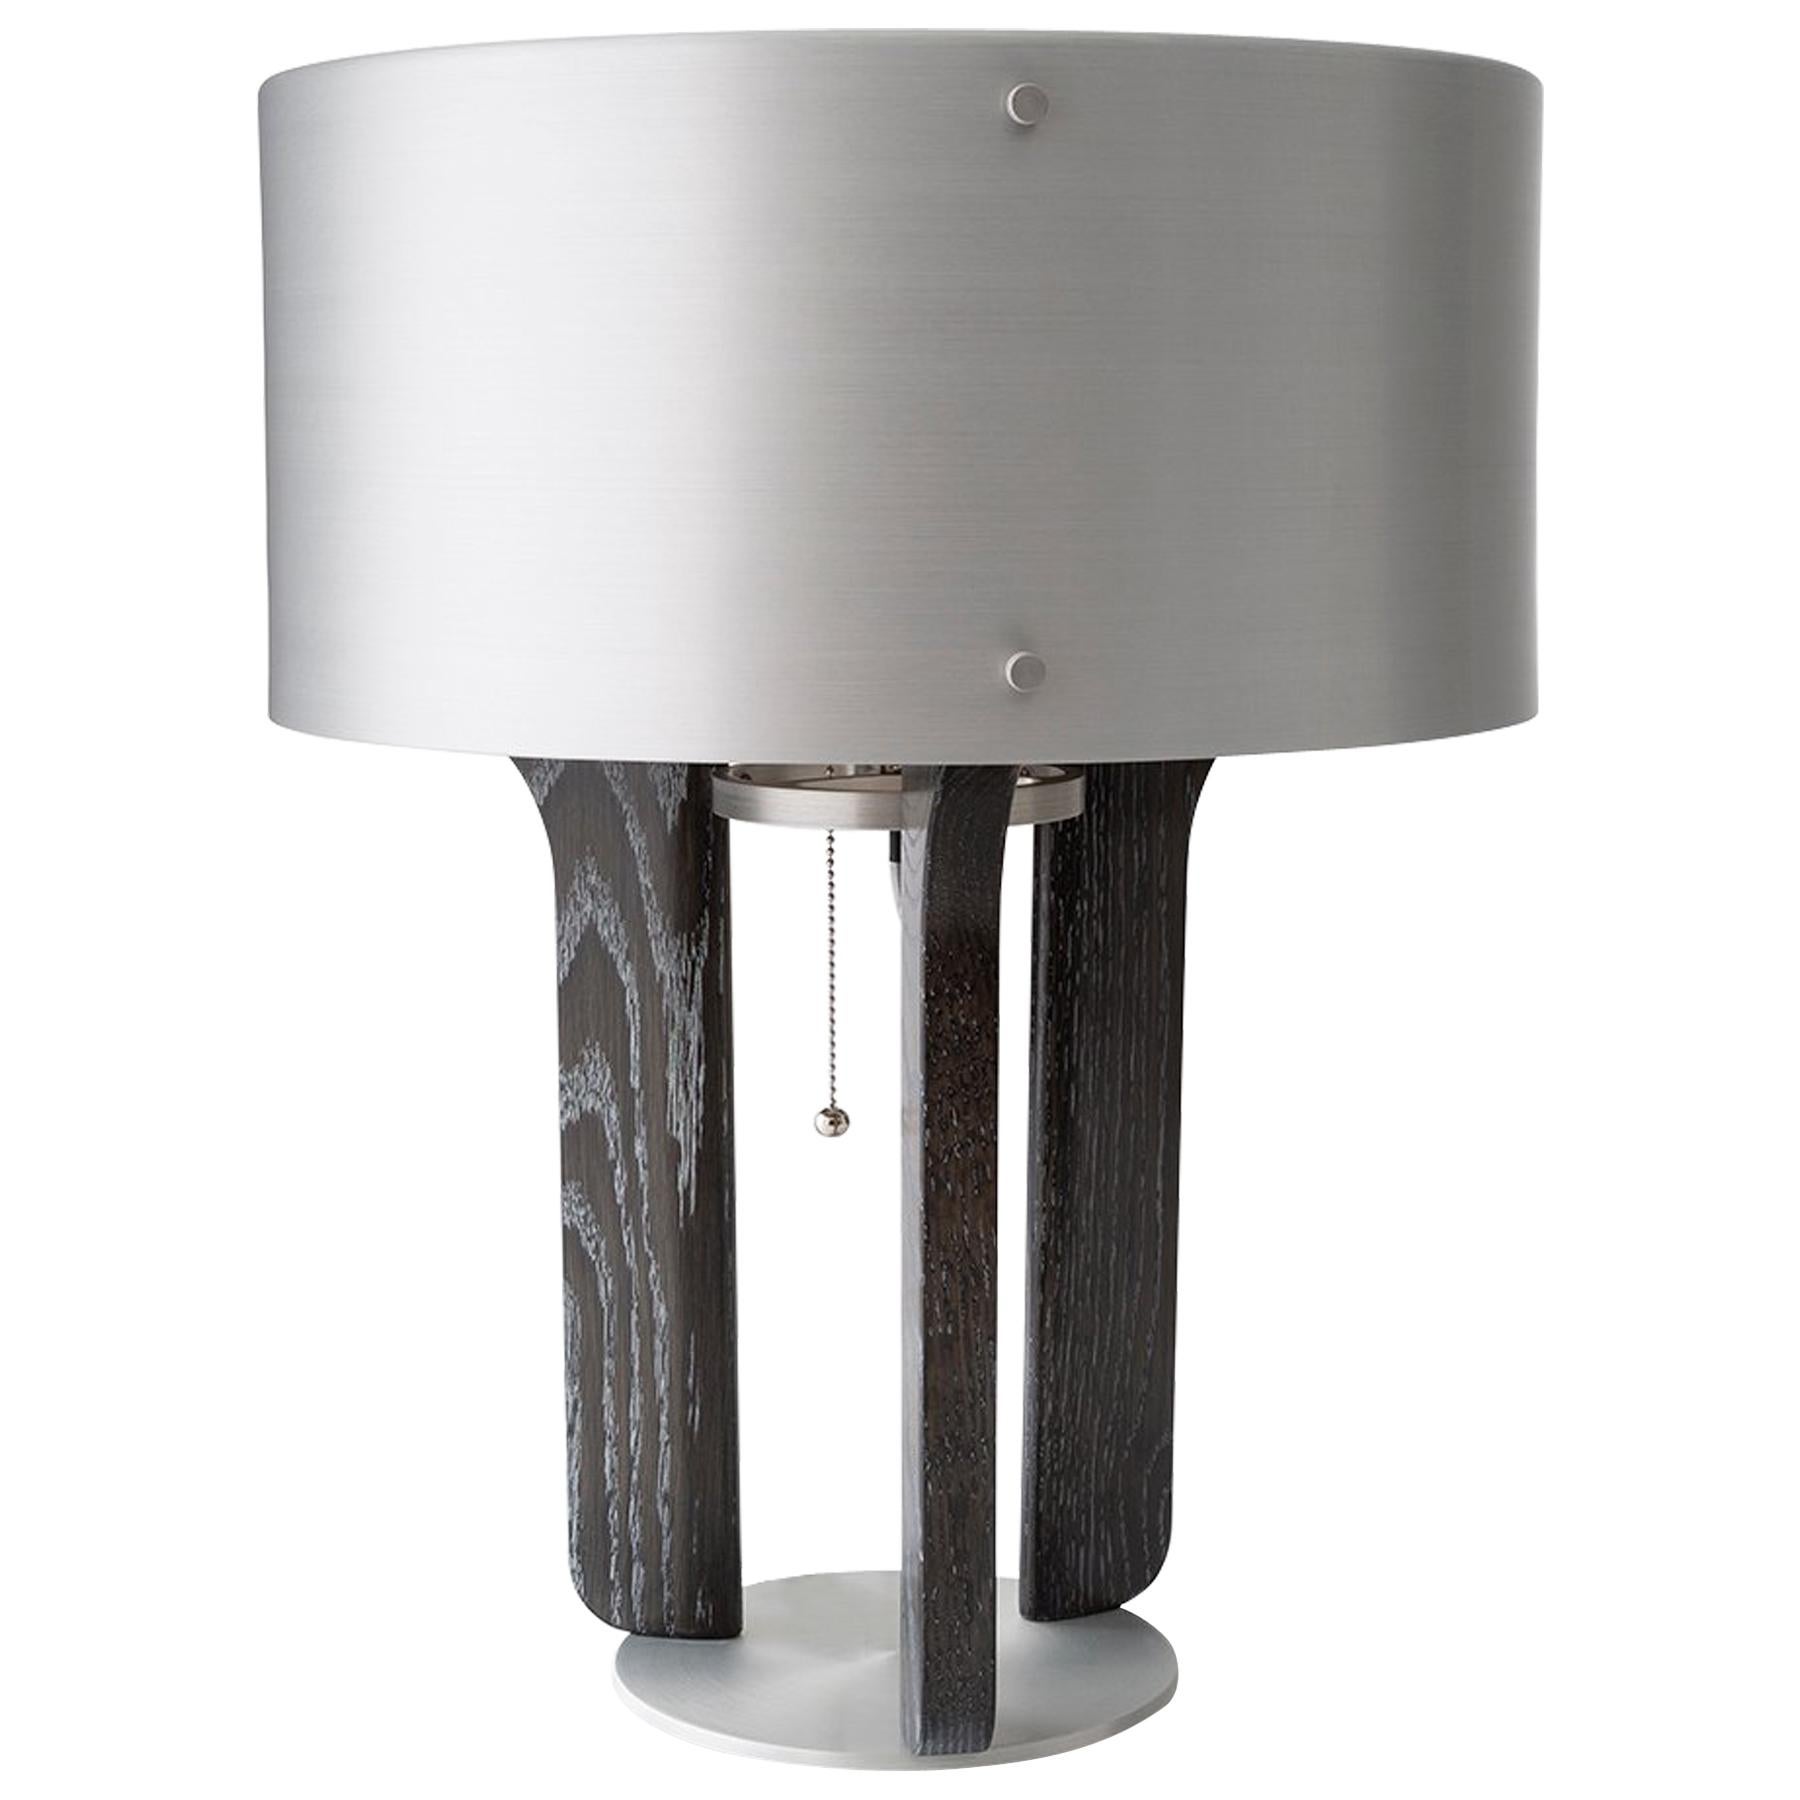 Pommer Table Lamp By Matthew Fairbank